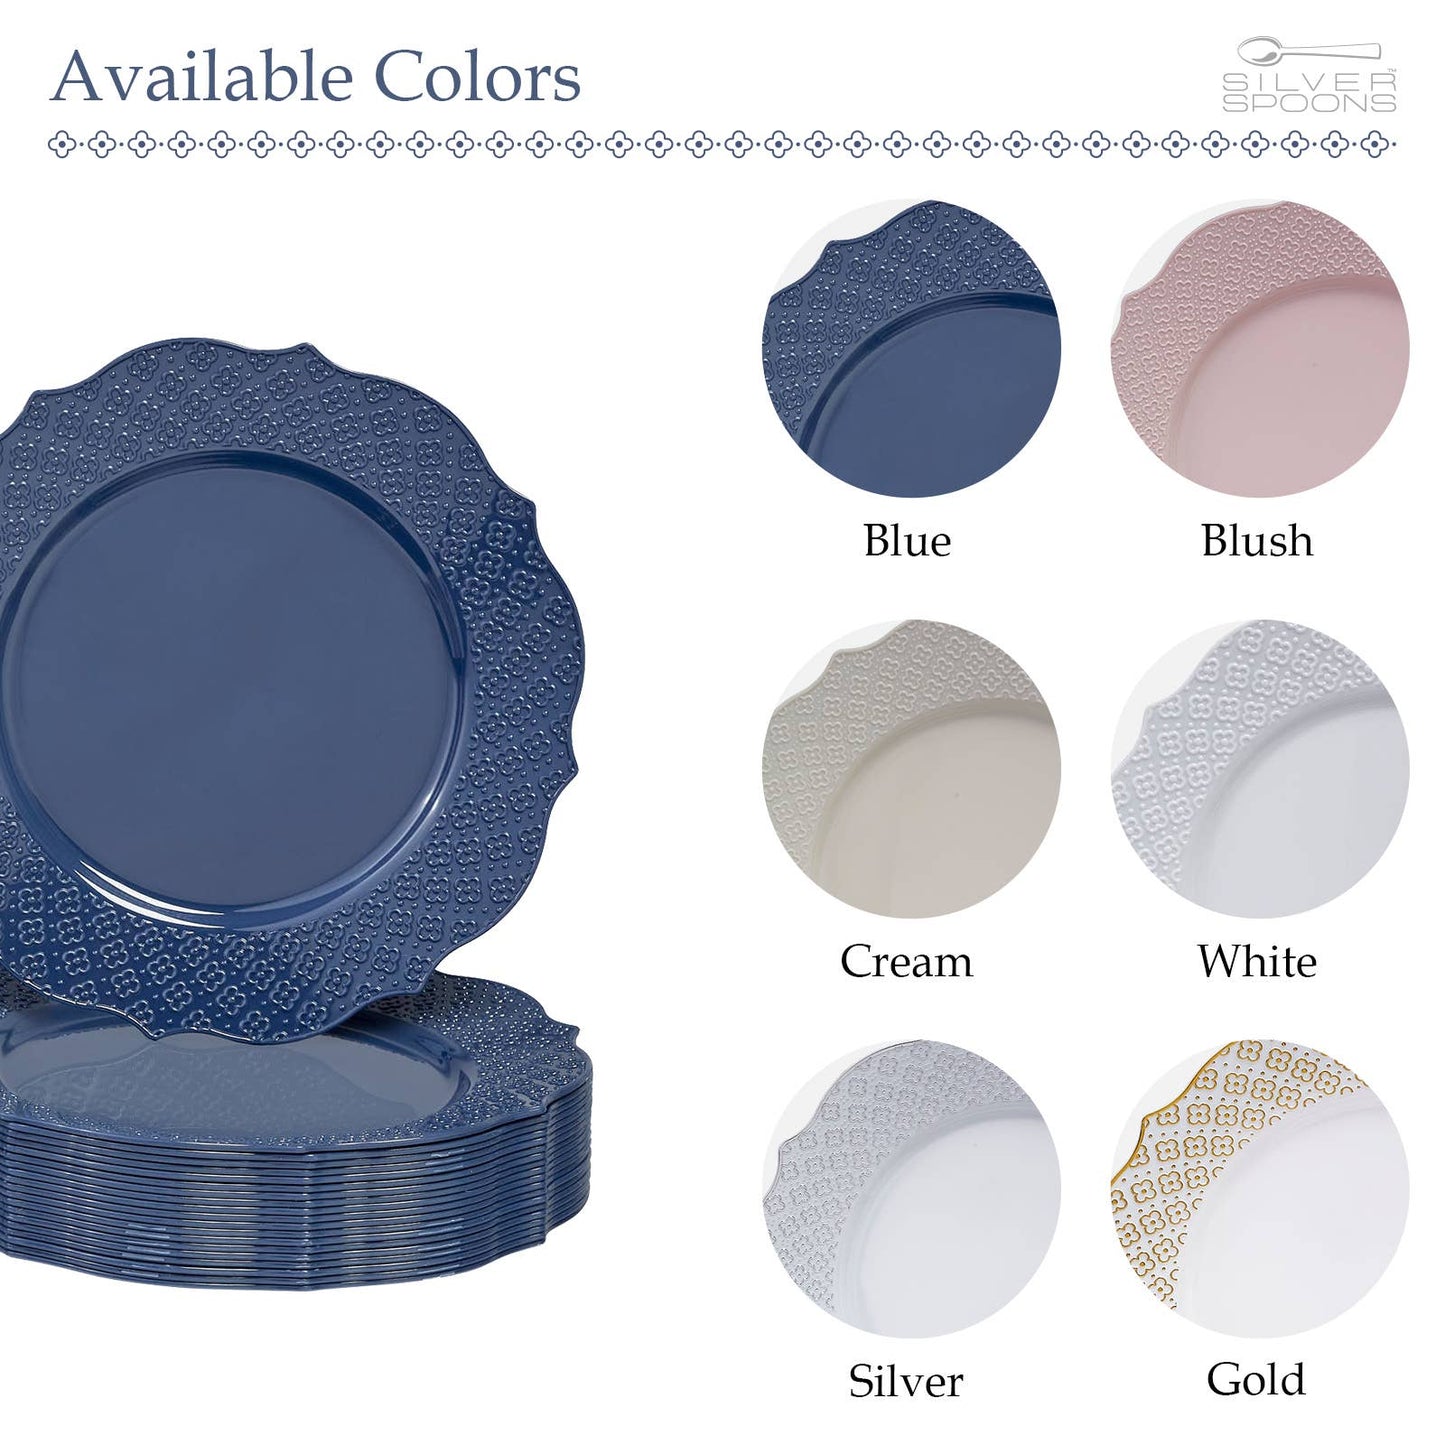 Blue Plates: Dessert Plates